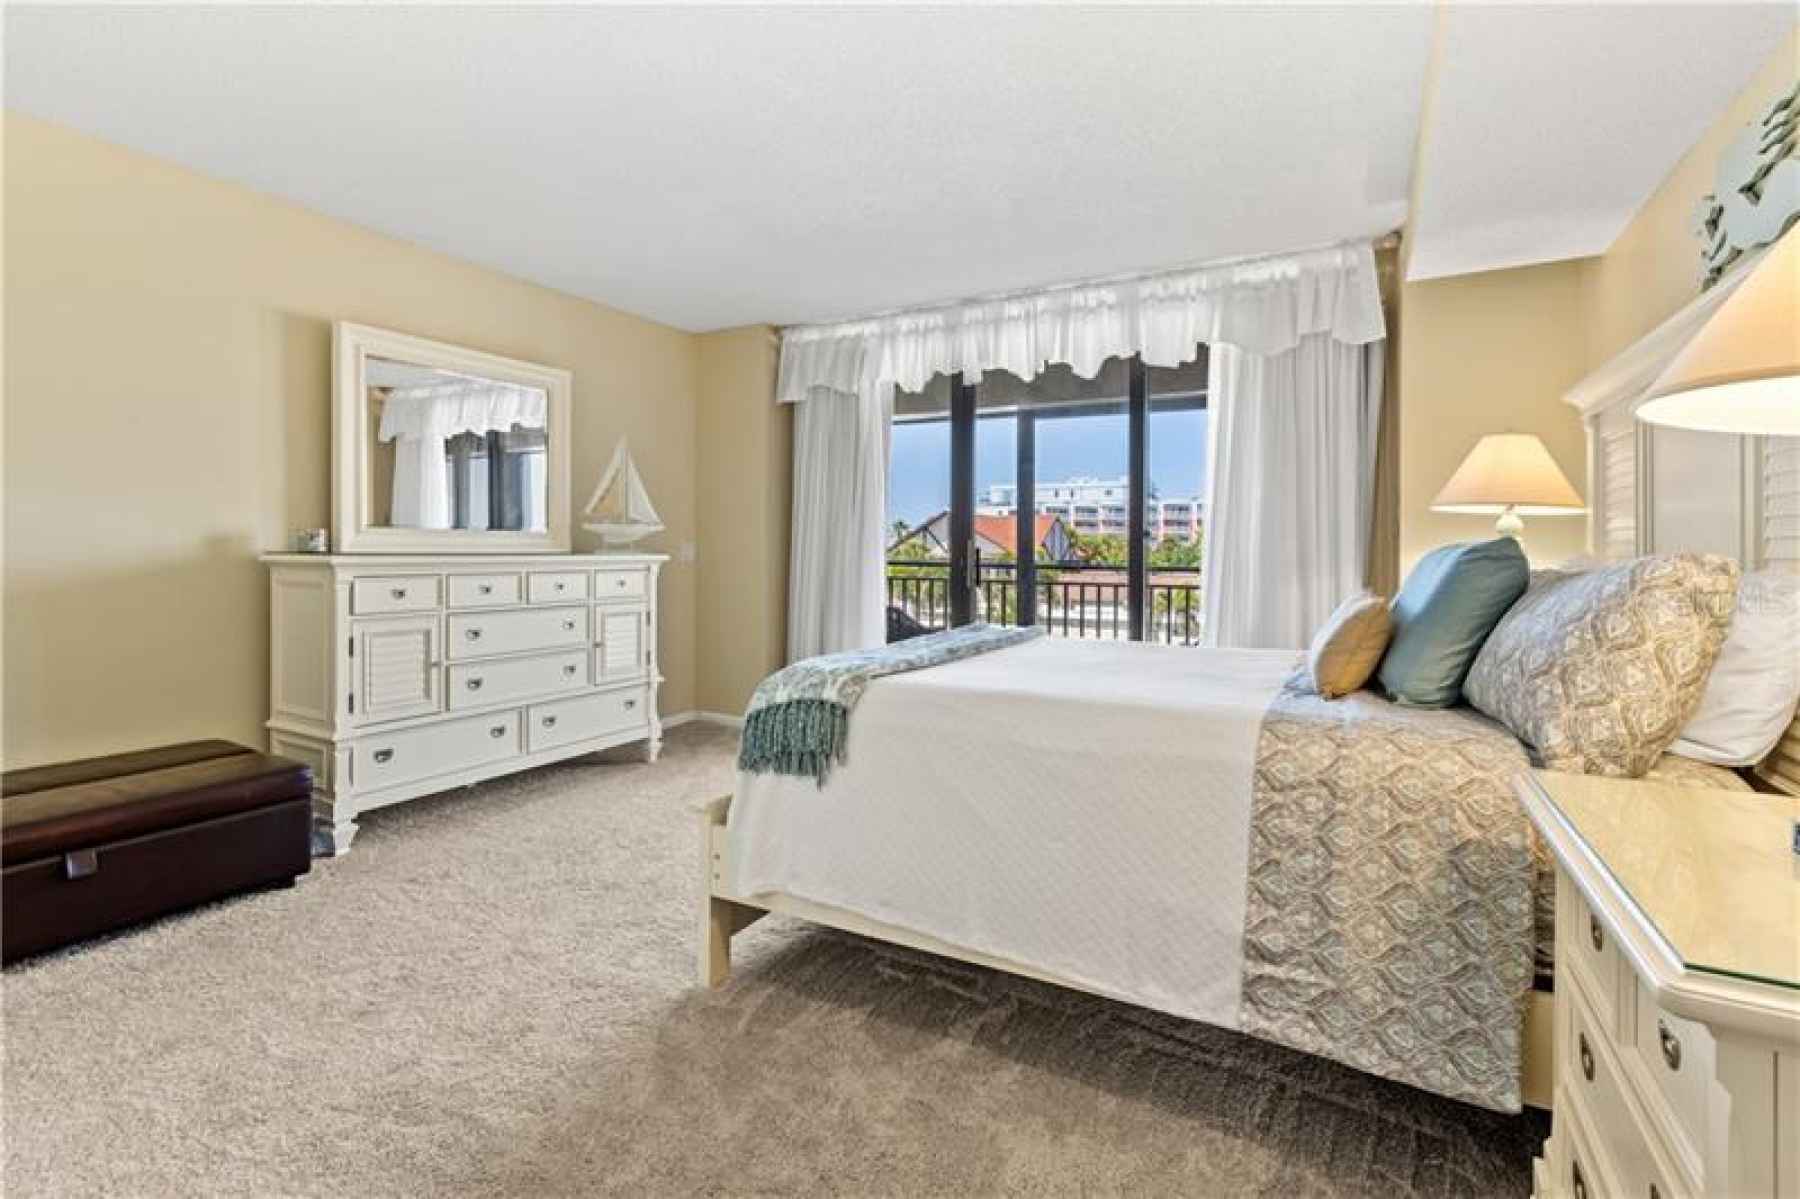 Master suite featuring beach views, sliding barn door, walk in closet, separate vanity area.